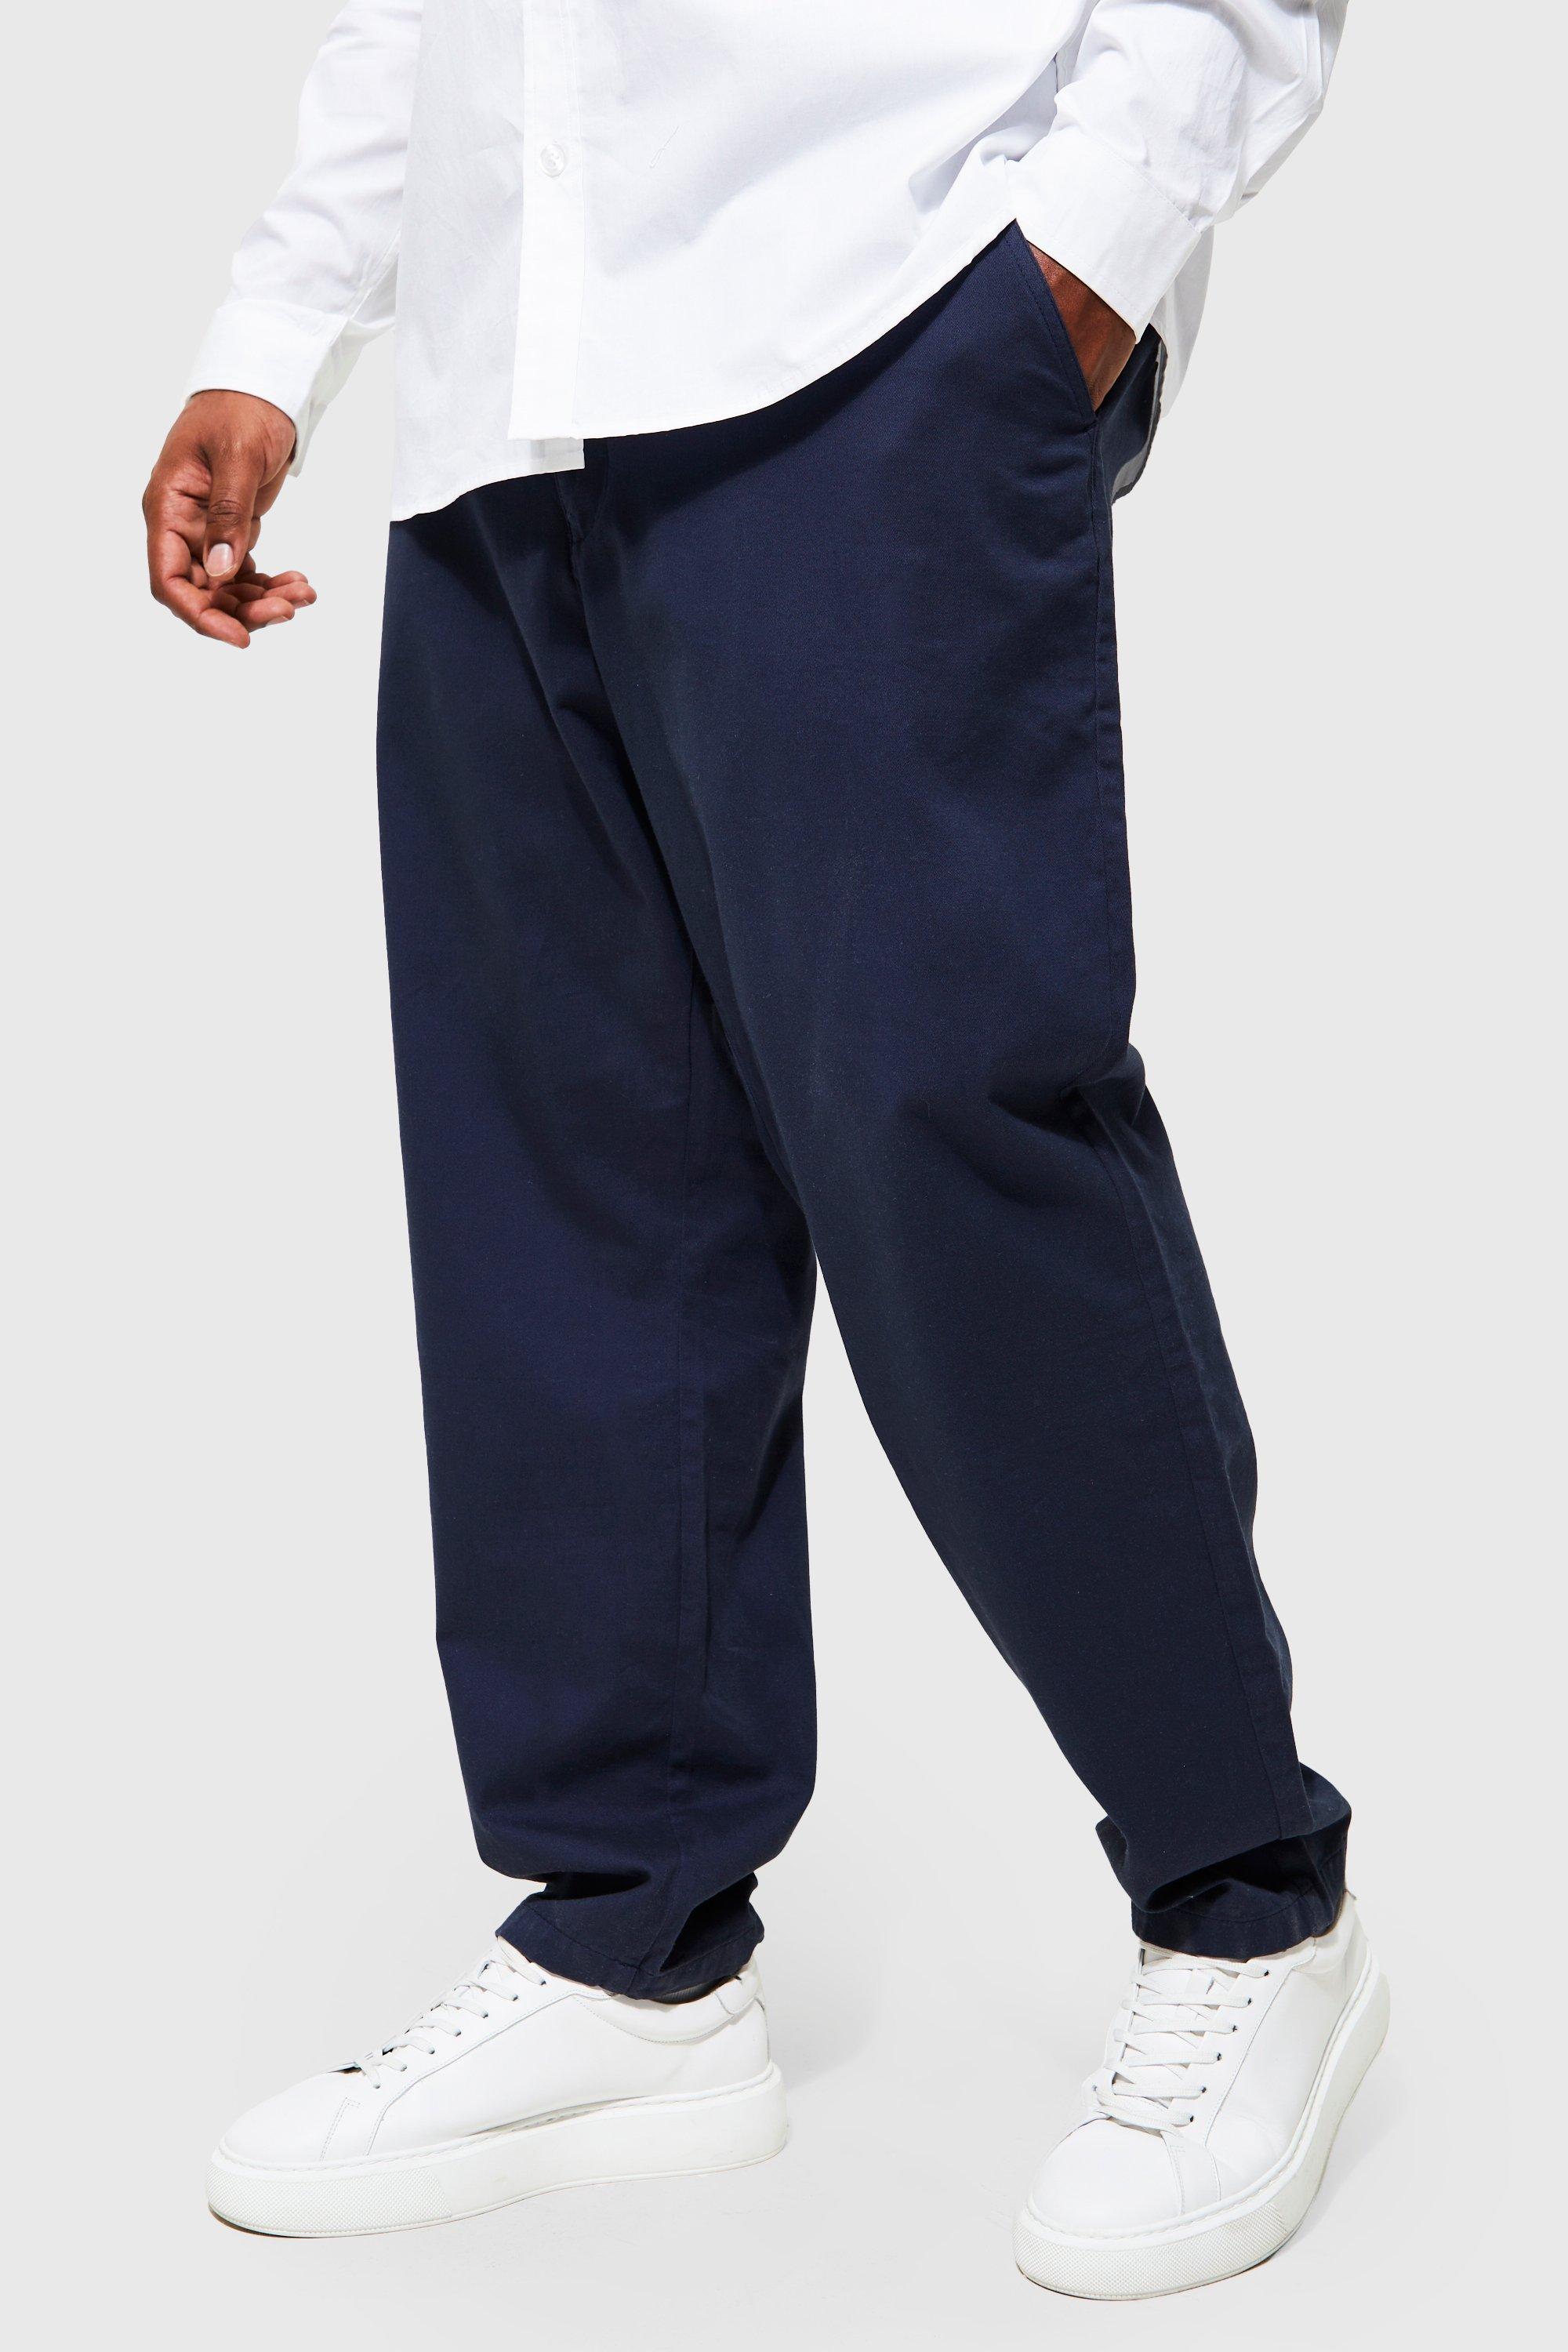 Image of Pantaloni Chino Plus Size Slim Fit, Navy